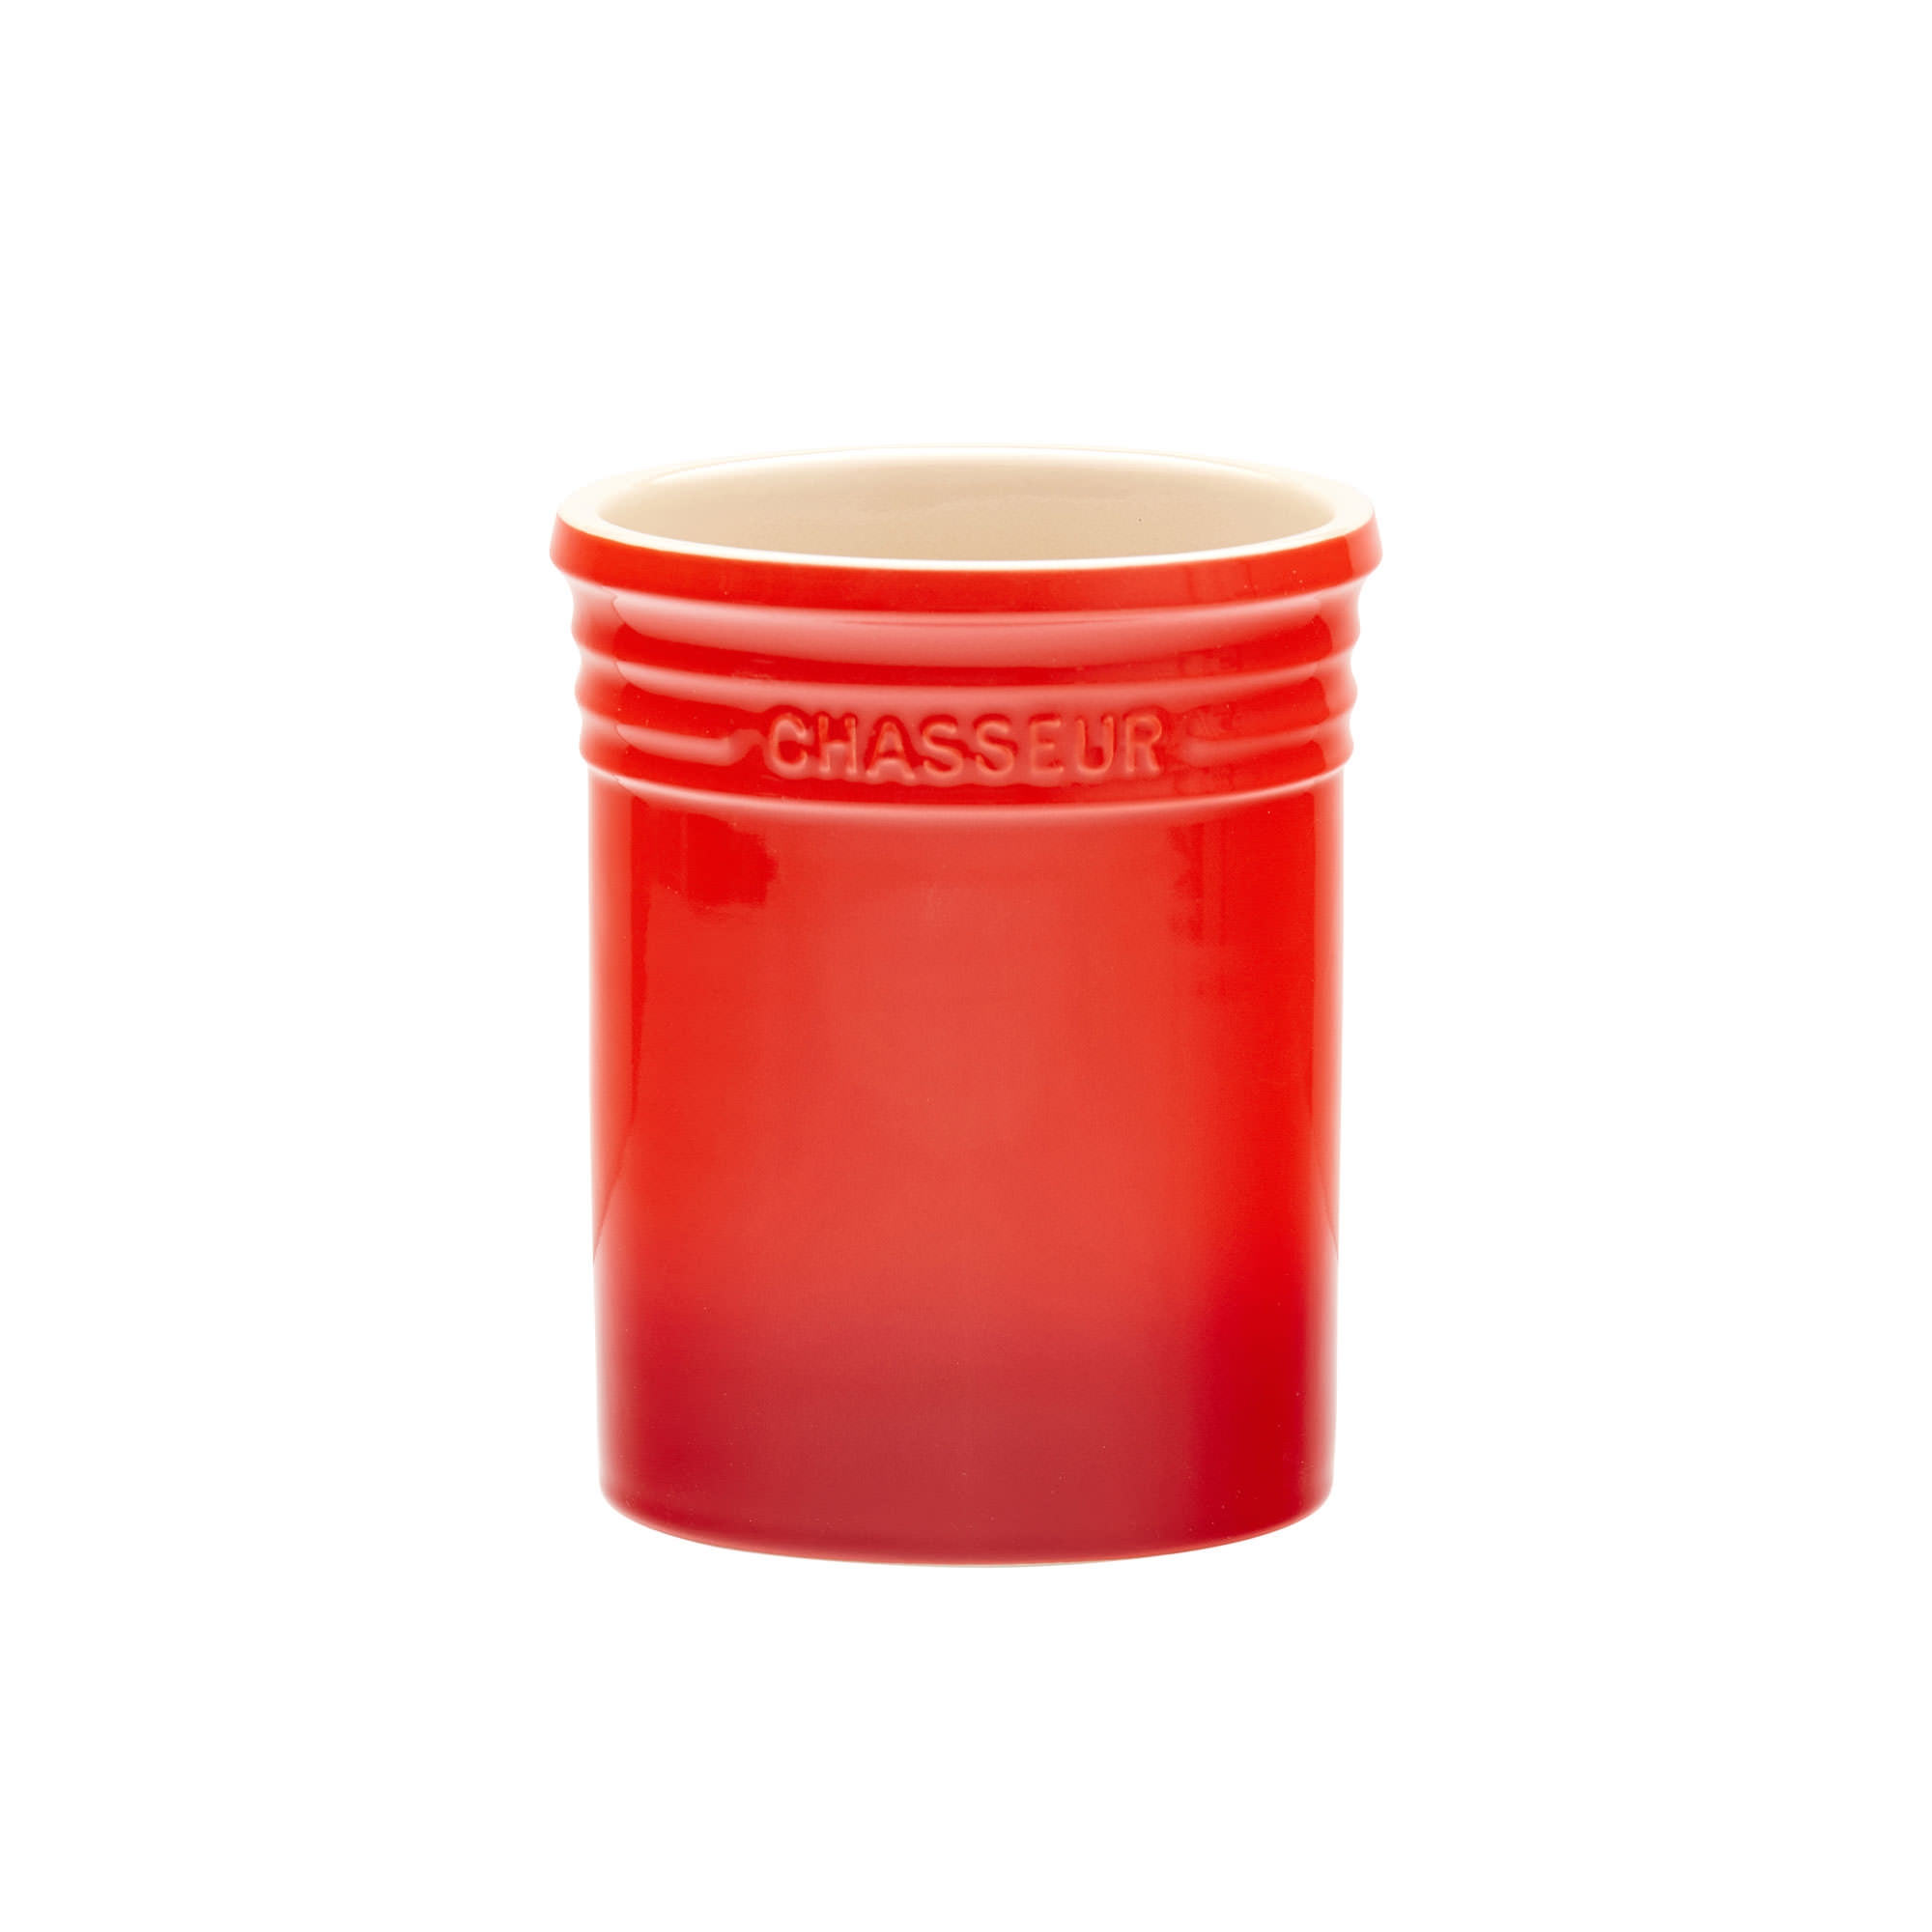 Chasseur La Cuisson Utensil Jar Red Image 1